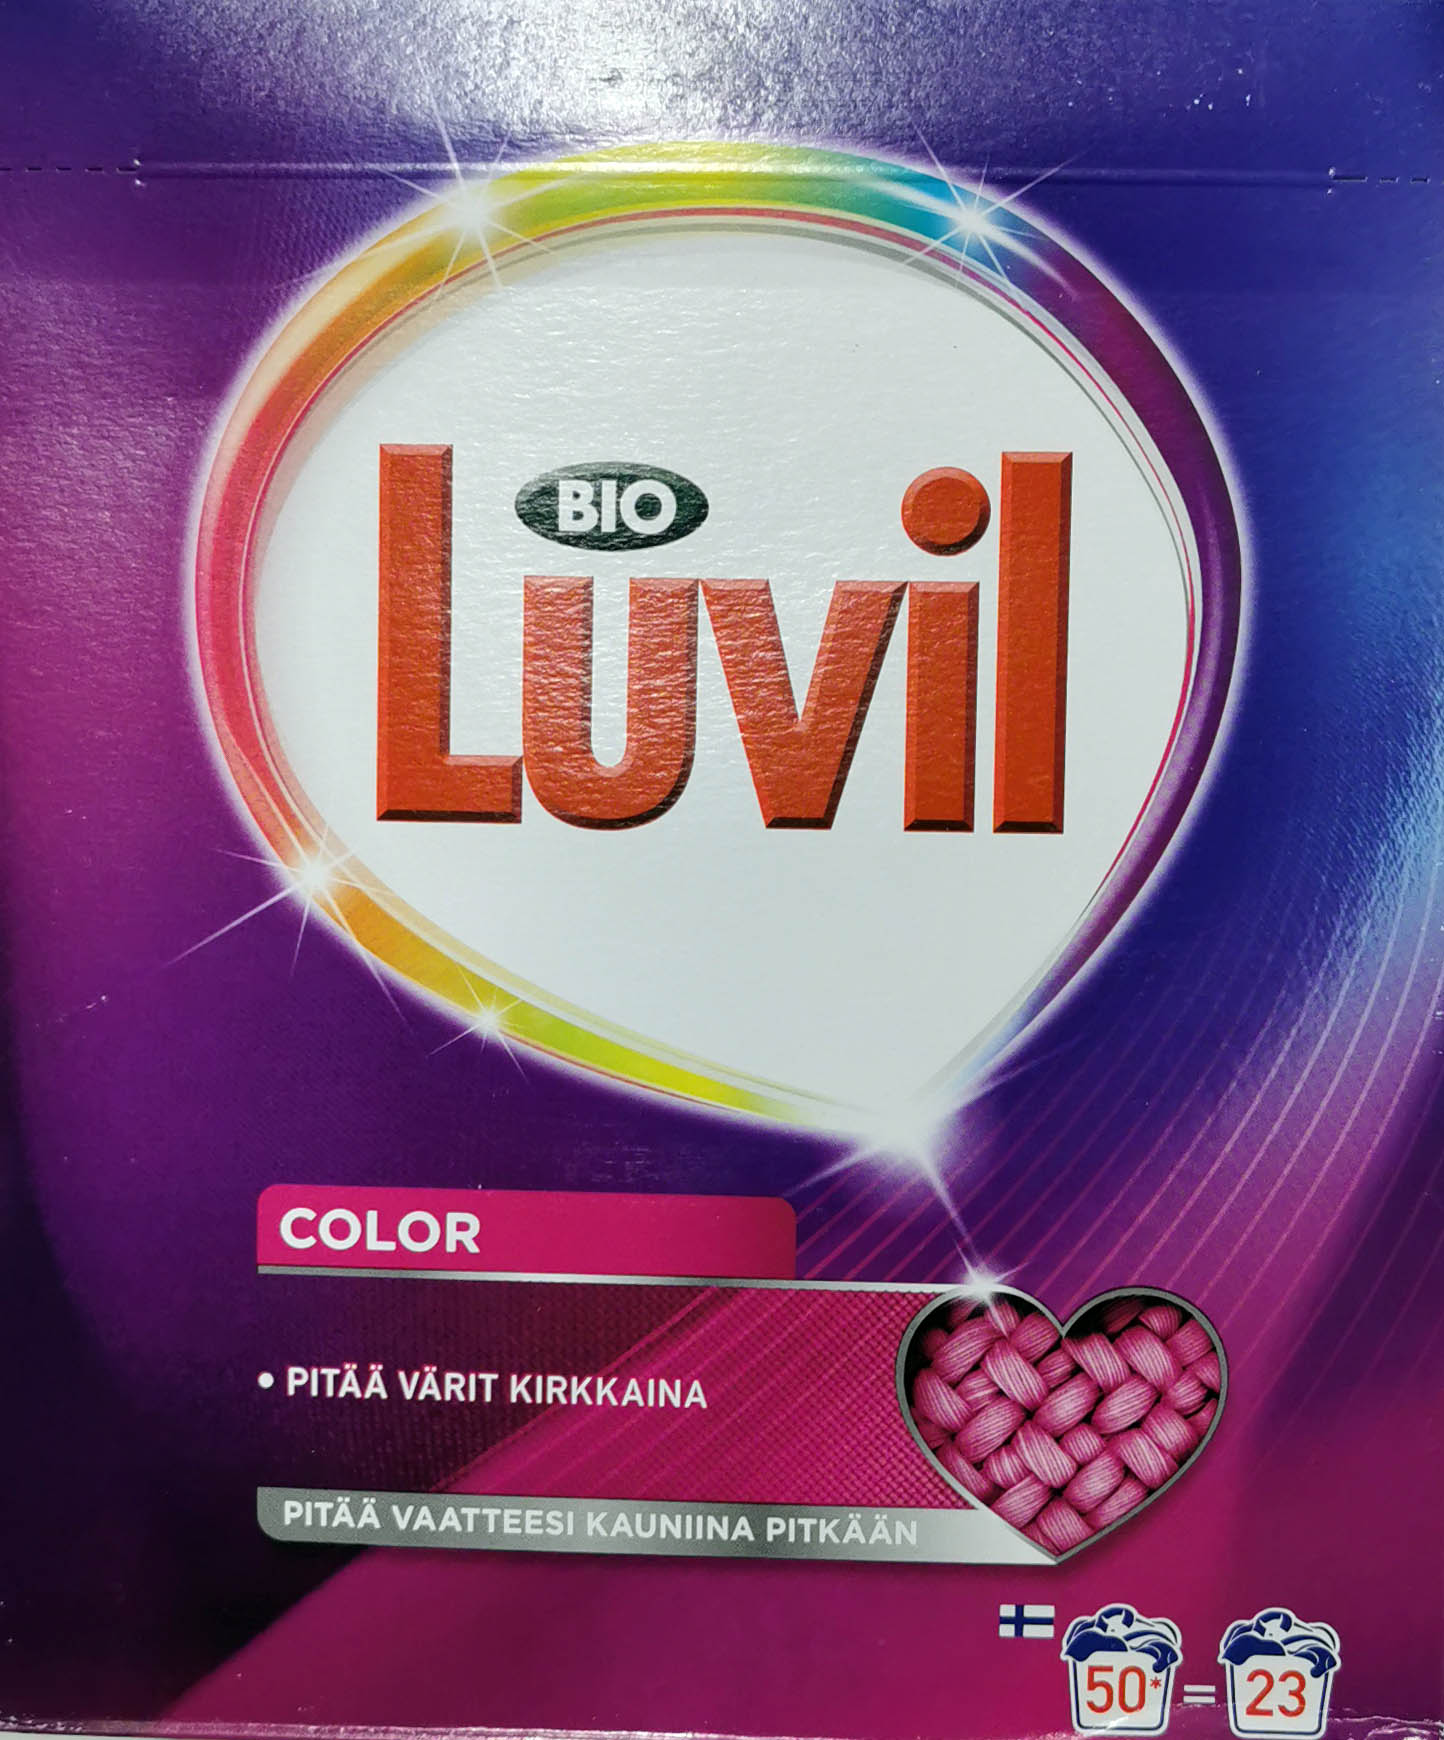 Bio Luvil Pyykinpesuaine Color 1,61kg